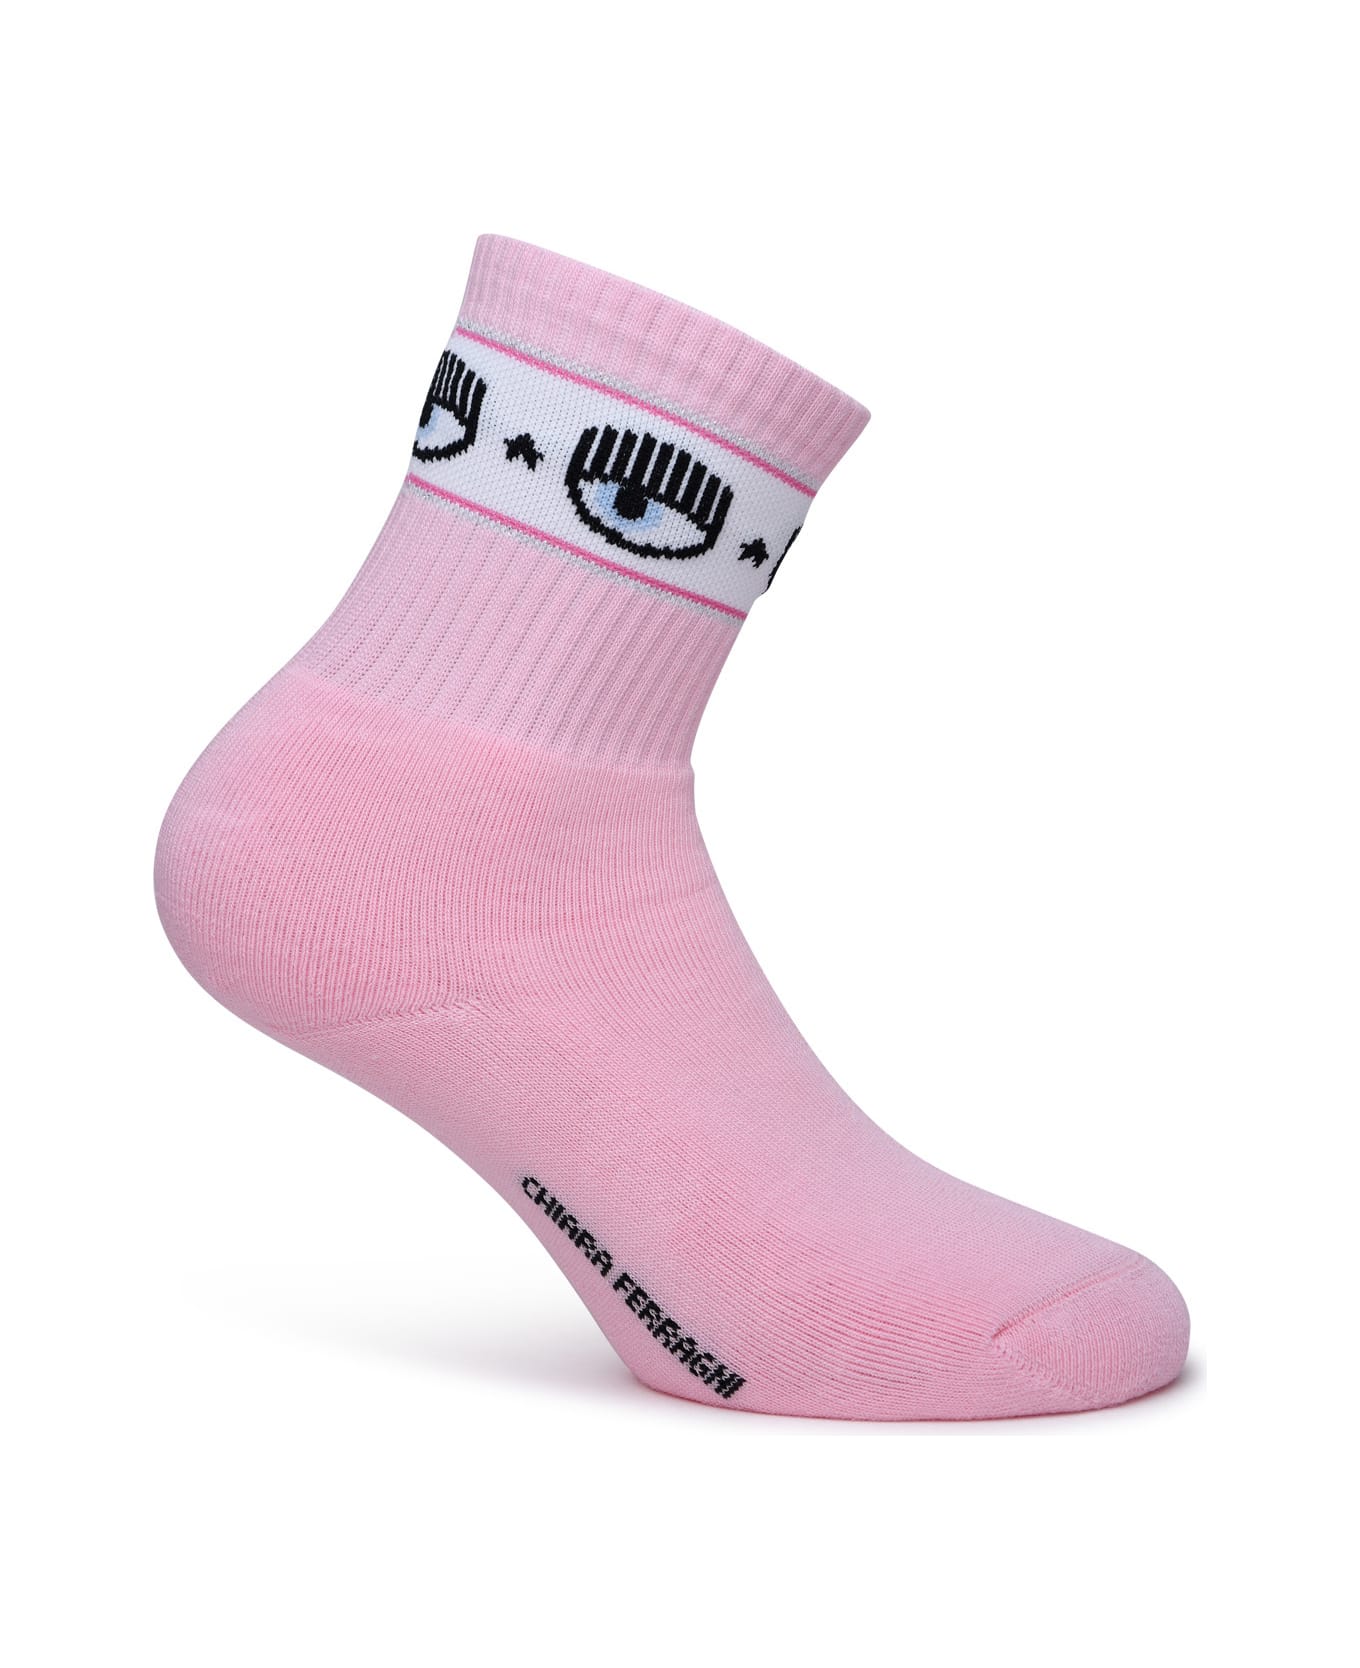 Chiara Ferragni Pink Cotton Blend Socks - Pink